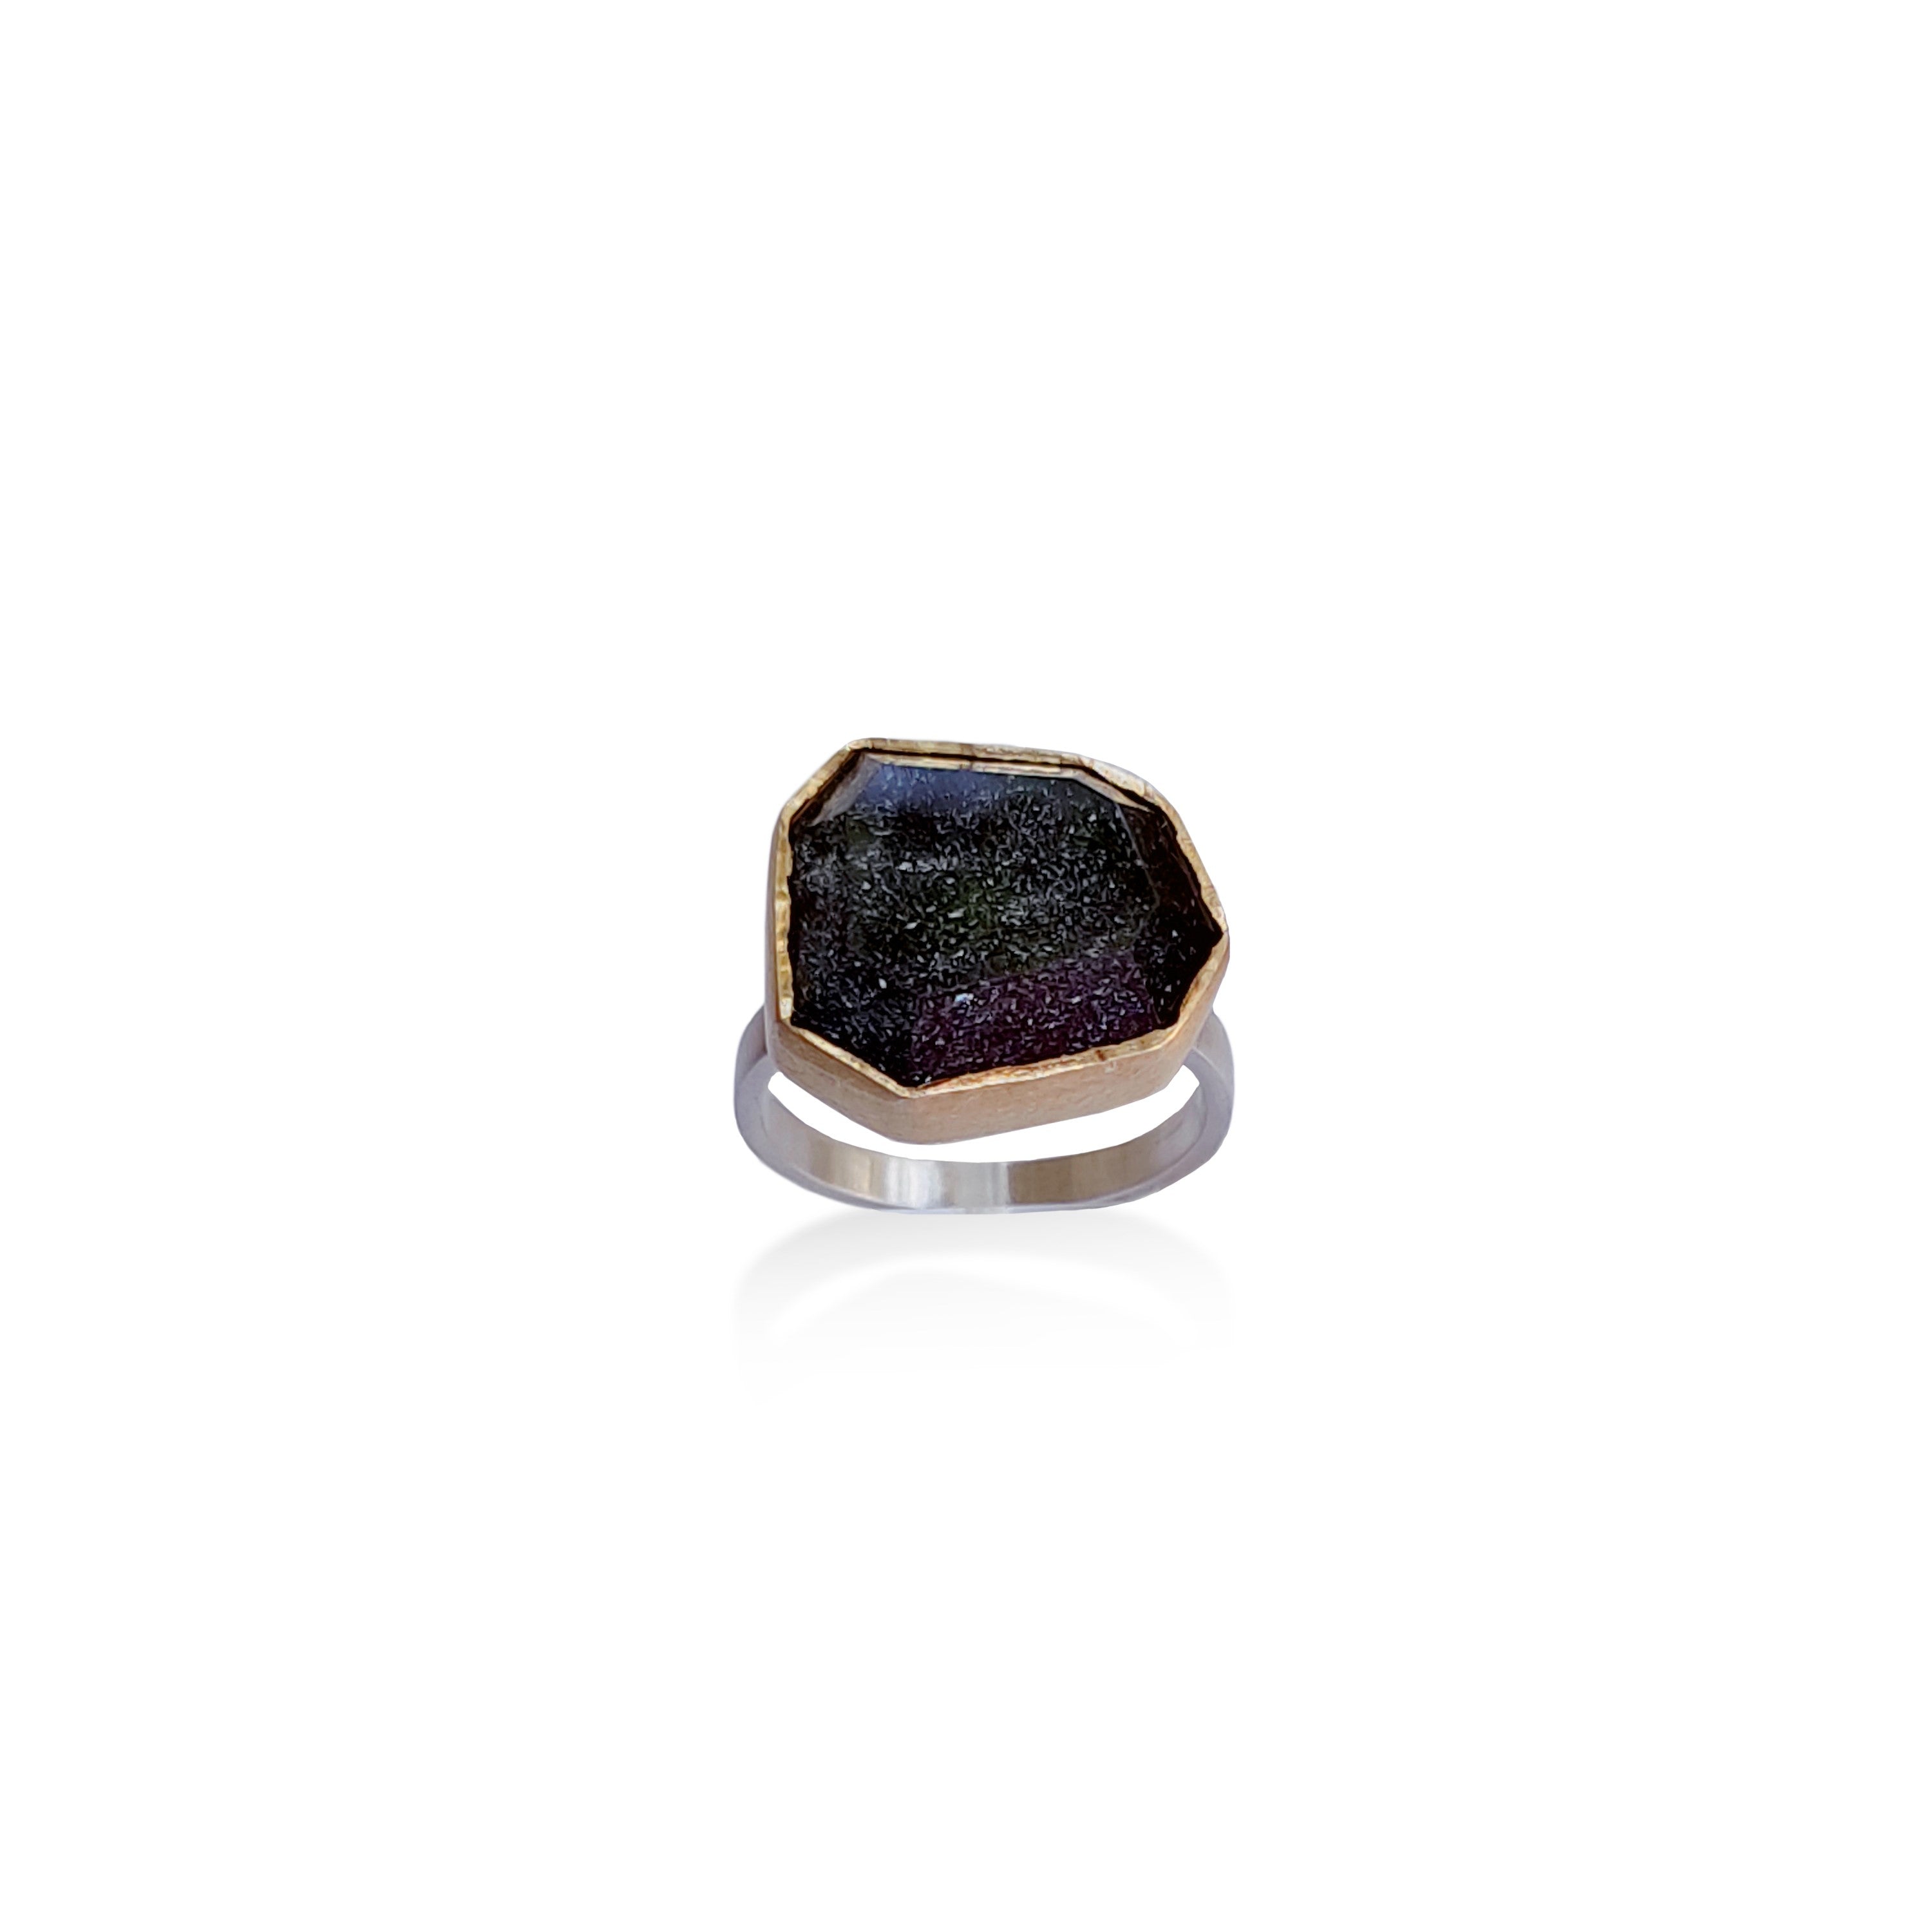 Hematite Ring - The Nancy Smillie Shop - Art, Jewellery & Designer Gifts Glasgow